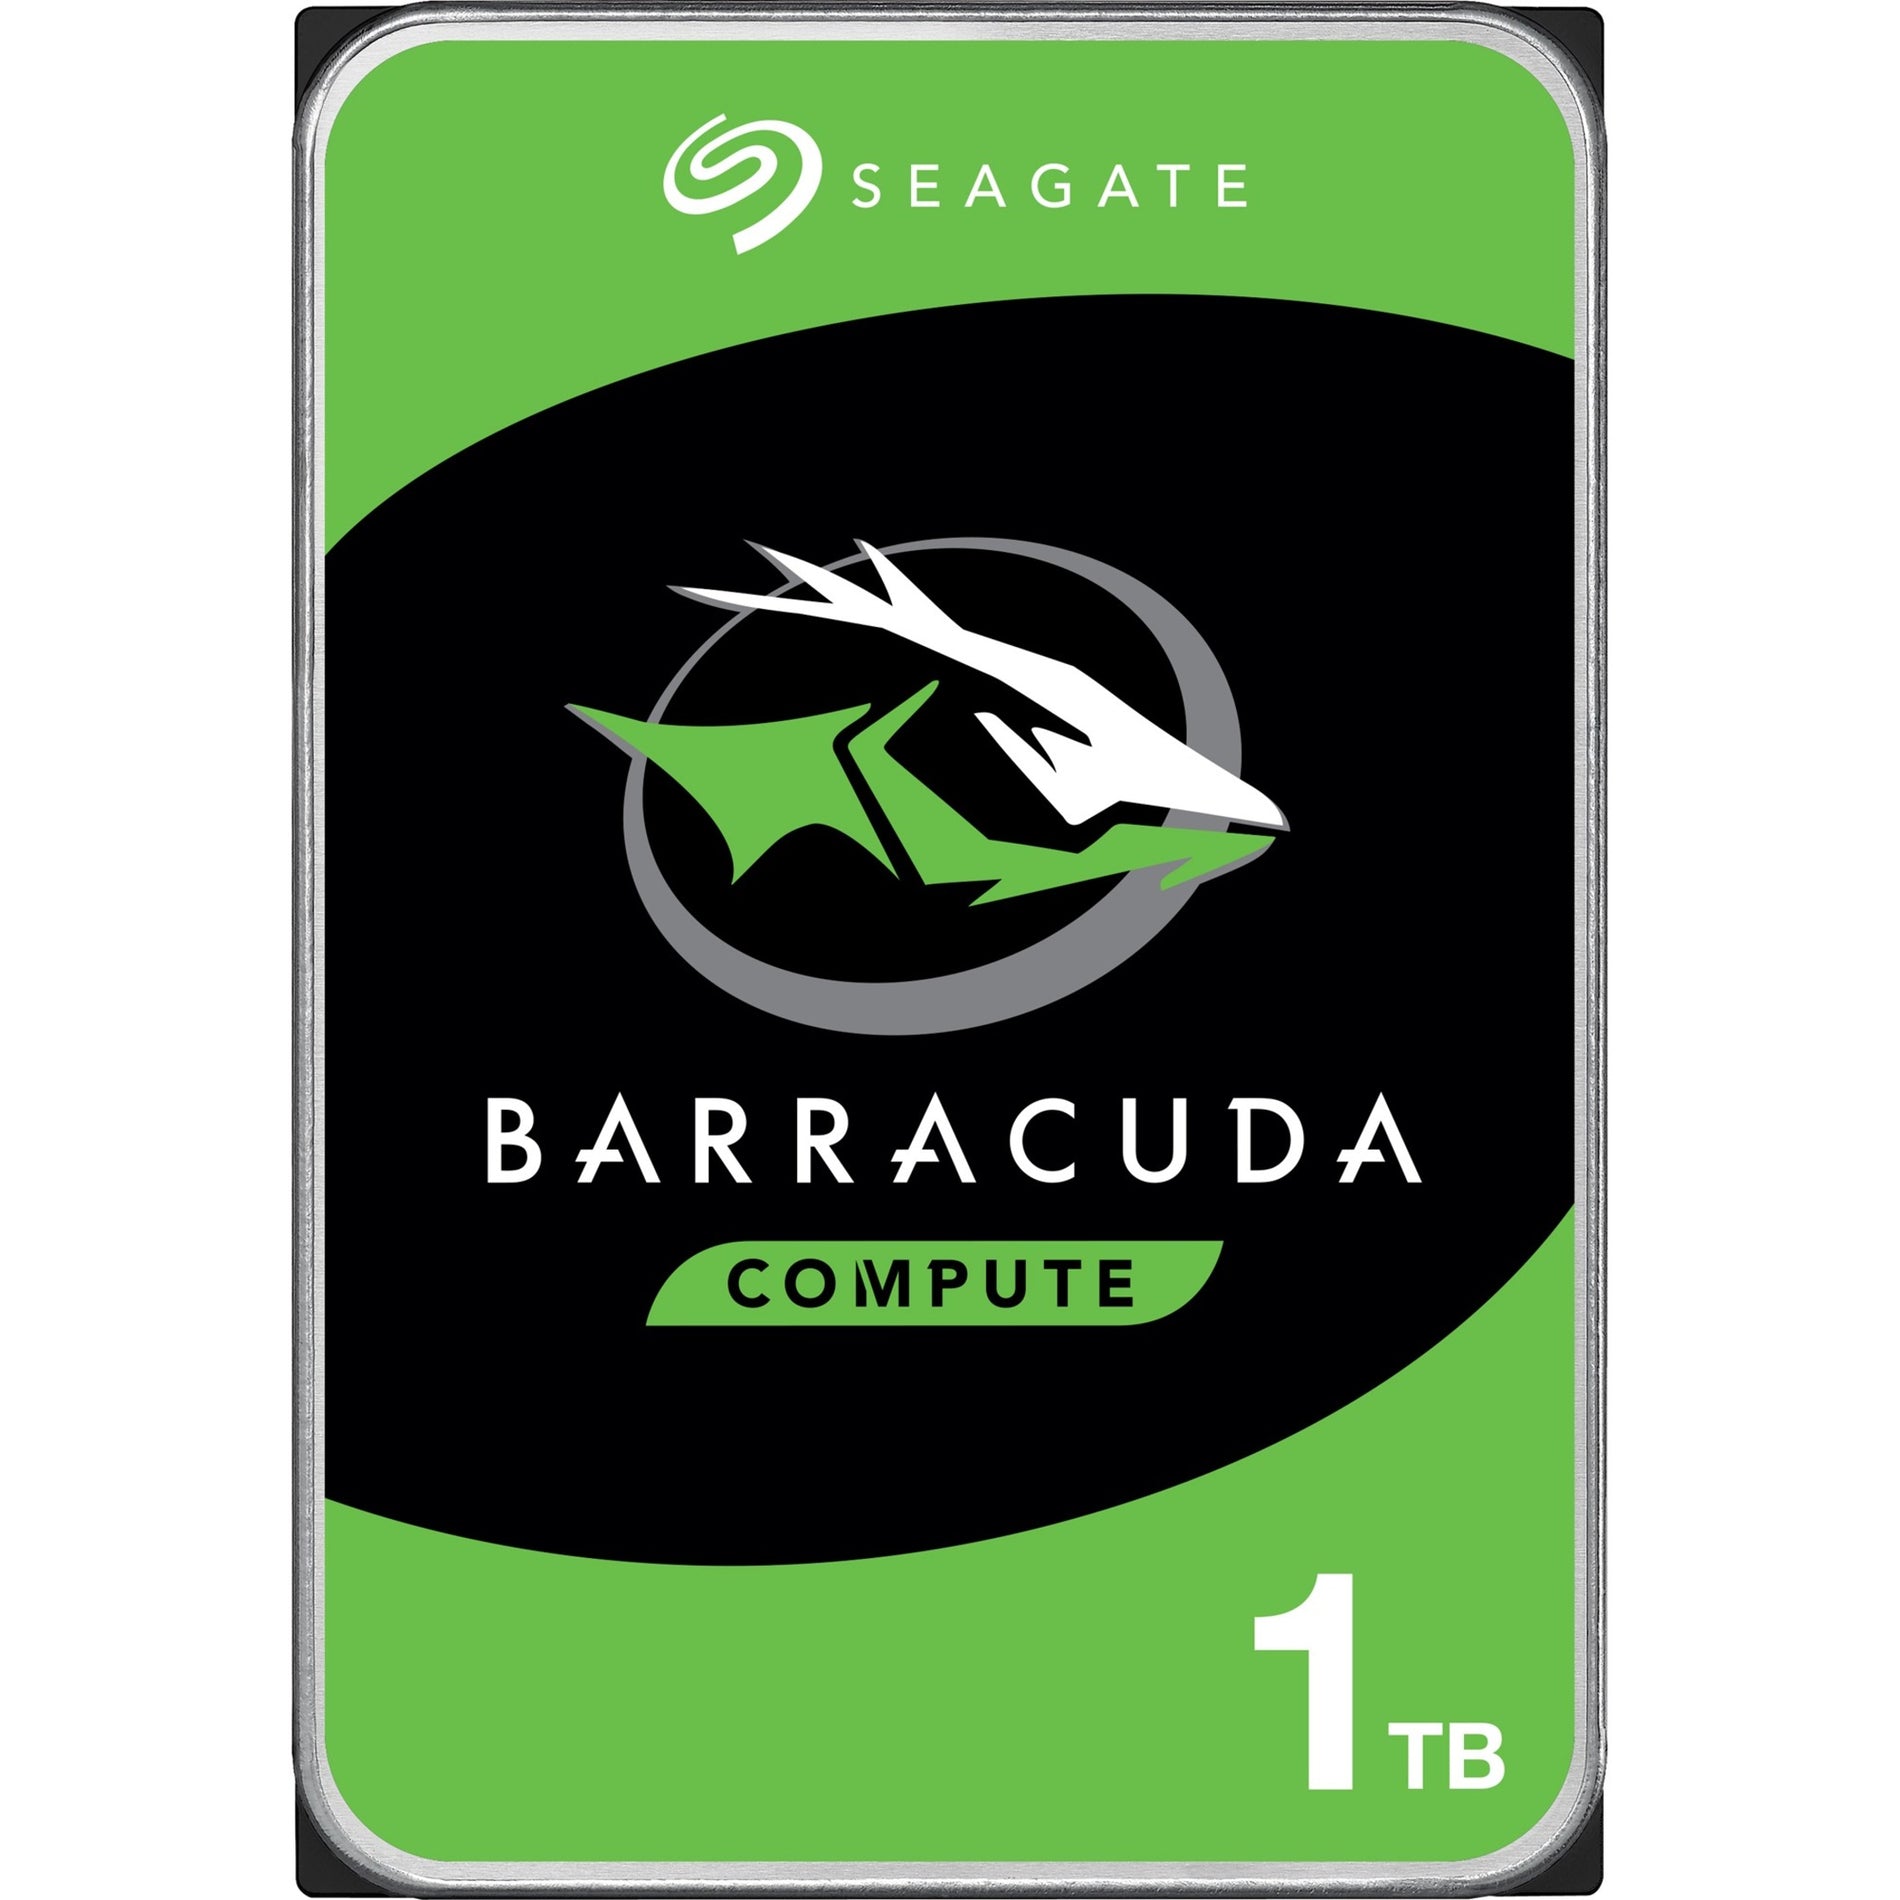 Seagate ST1000LM048 BarraCuda Hard Drive 1 TB, 2 Year Warranty, SATA/600, 5400RPM, 128MB Buffer